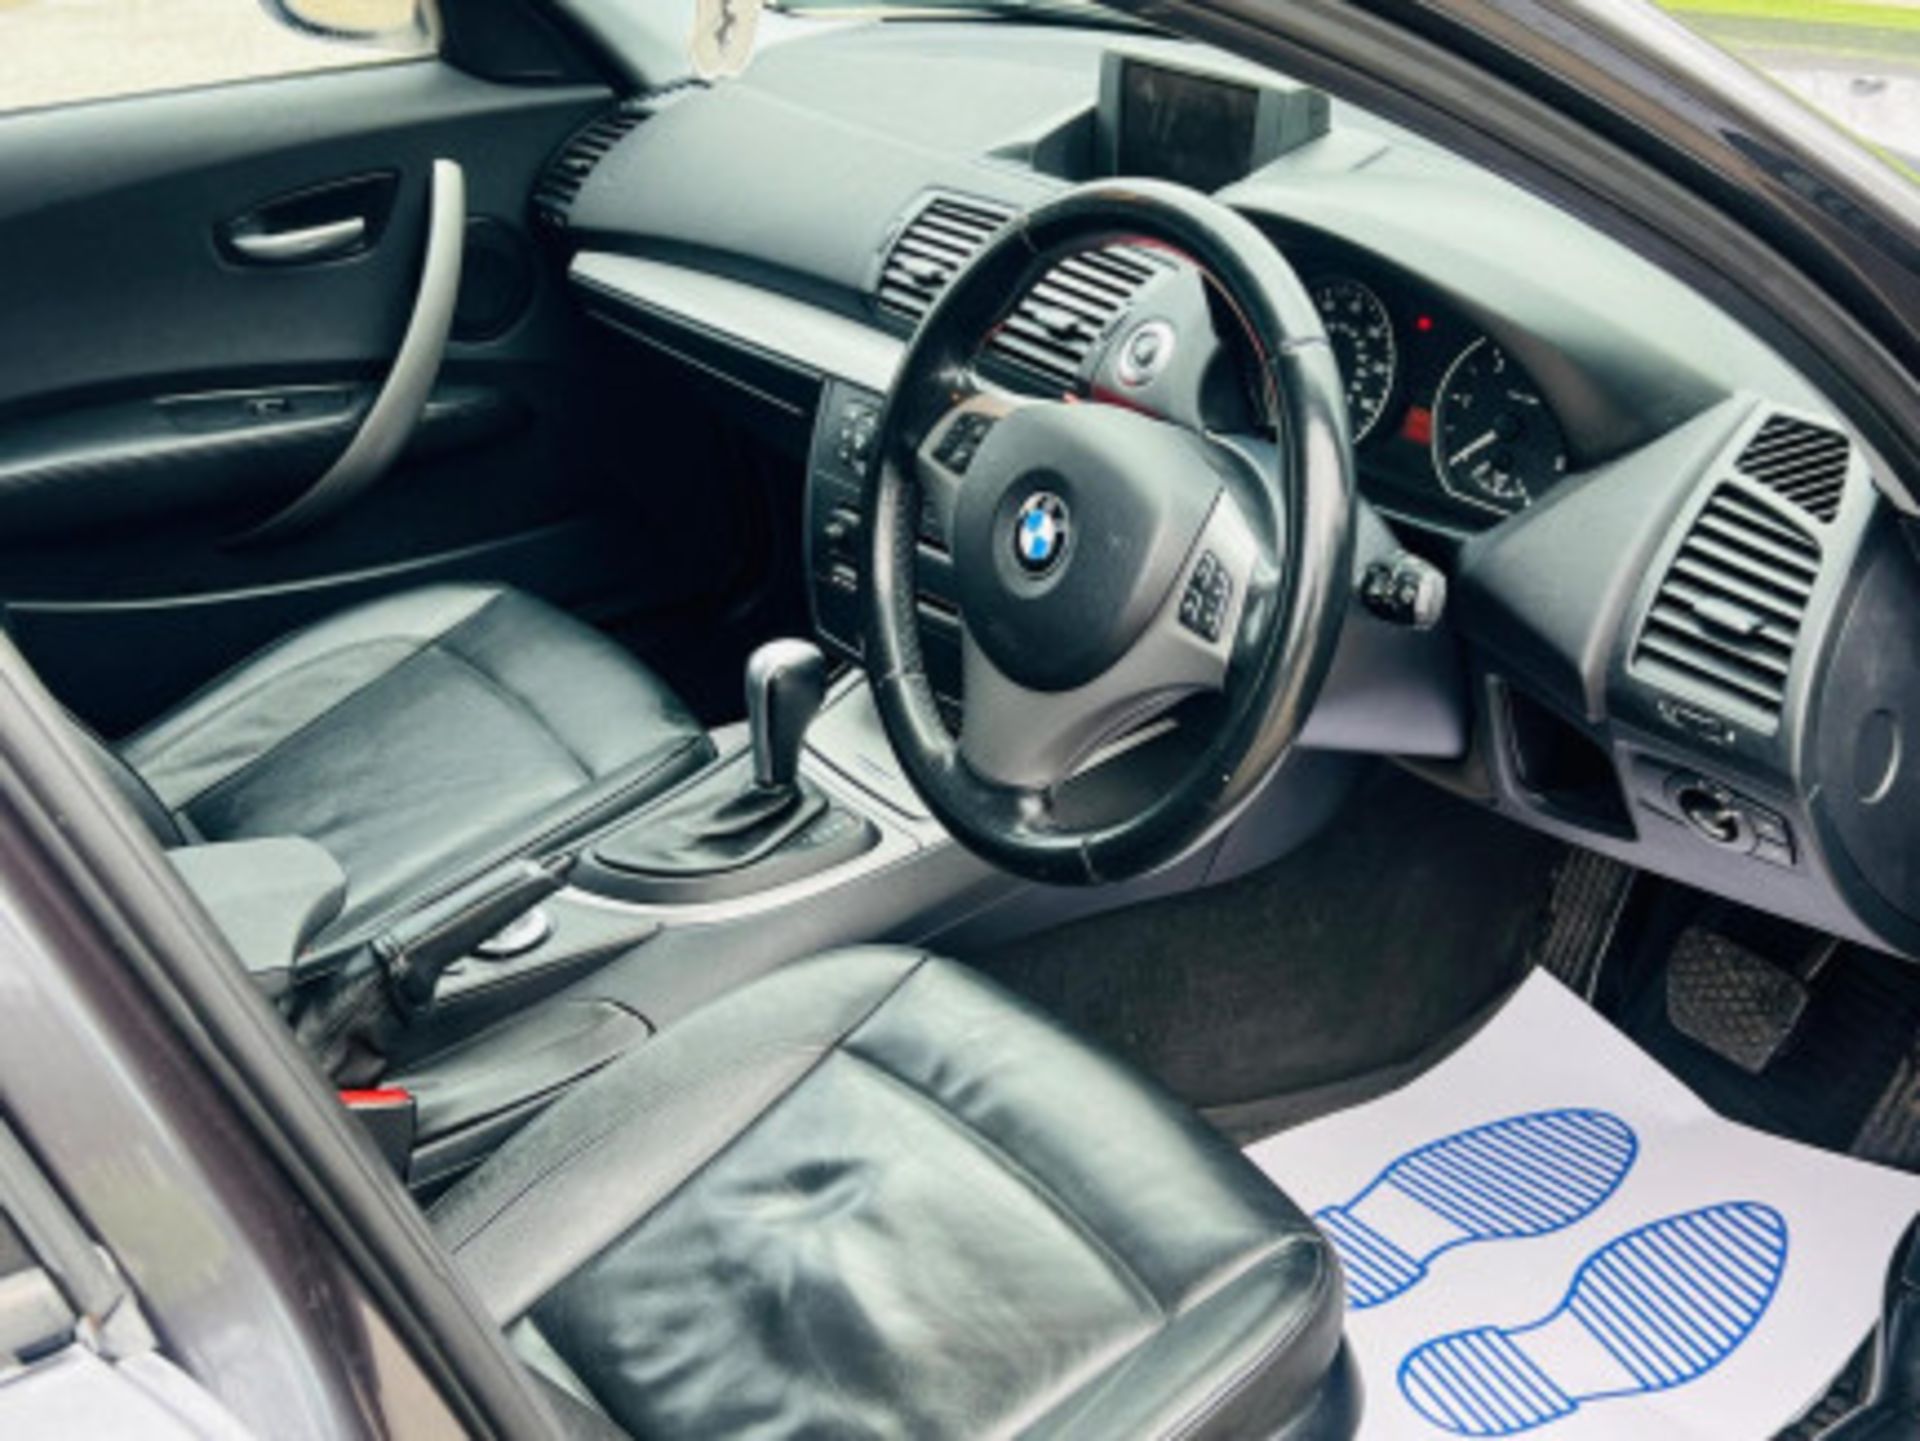 BMW 1 SERIES 2.0 120D SE STEPTRONIC - STYLE, PERFORMANCE >>--NO VAT ON HAMMER--<< - Image 27 of 91